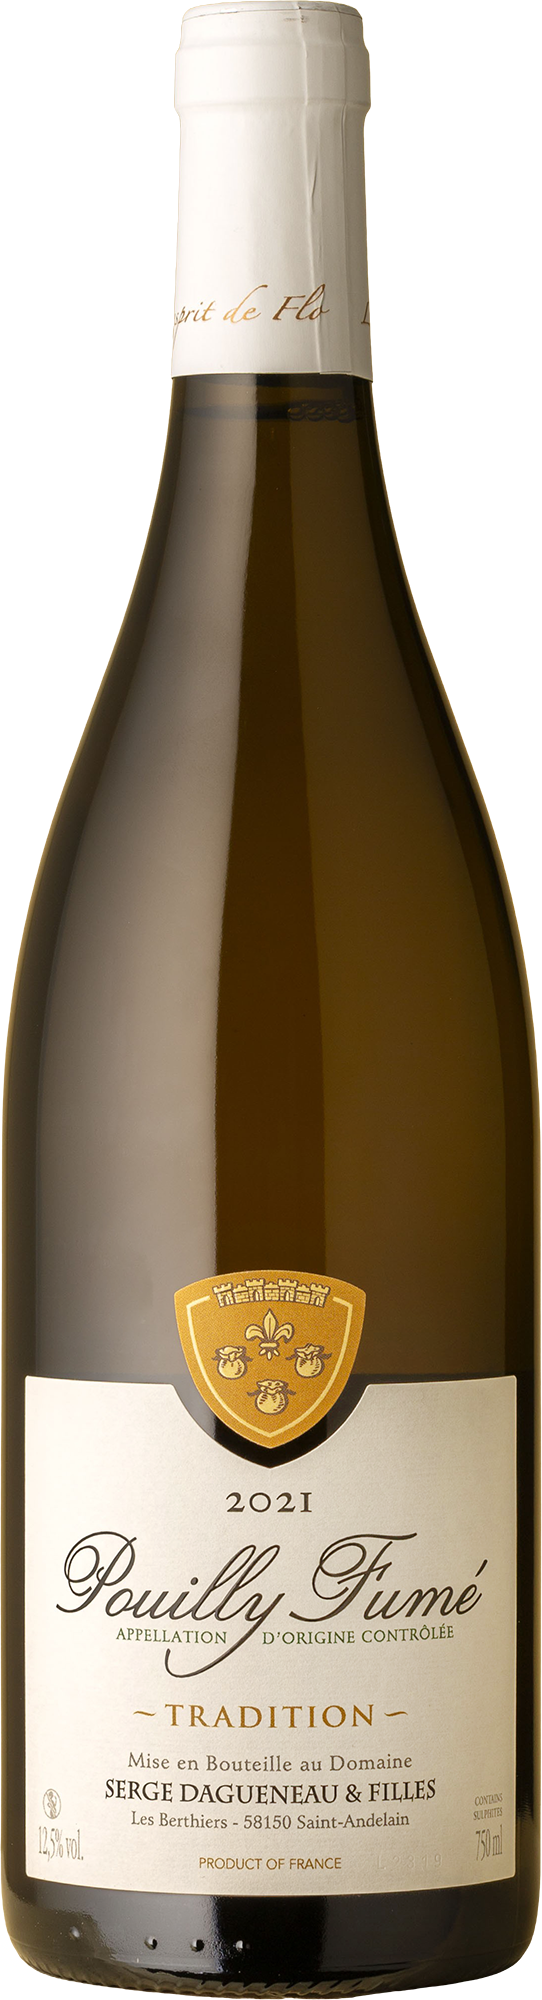 Serge Dagueneau - Pouilly Fumé Sauvignon Blanc 2021 White Wine